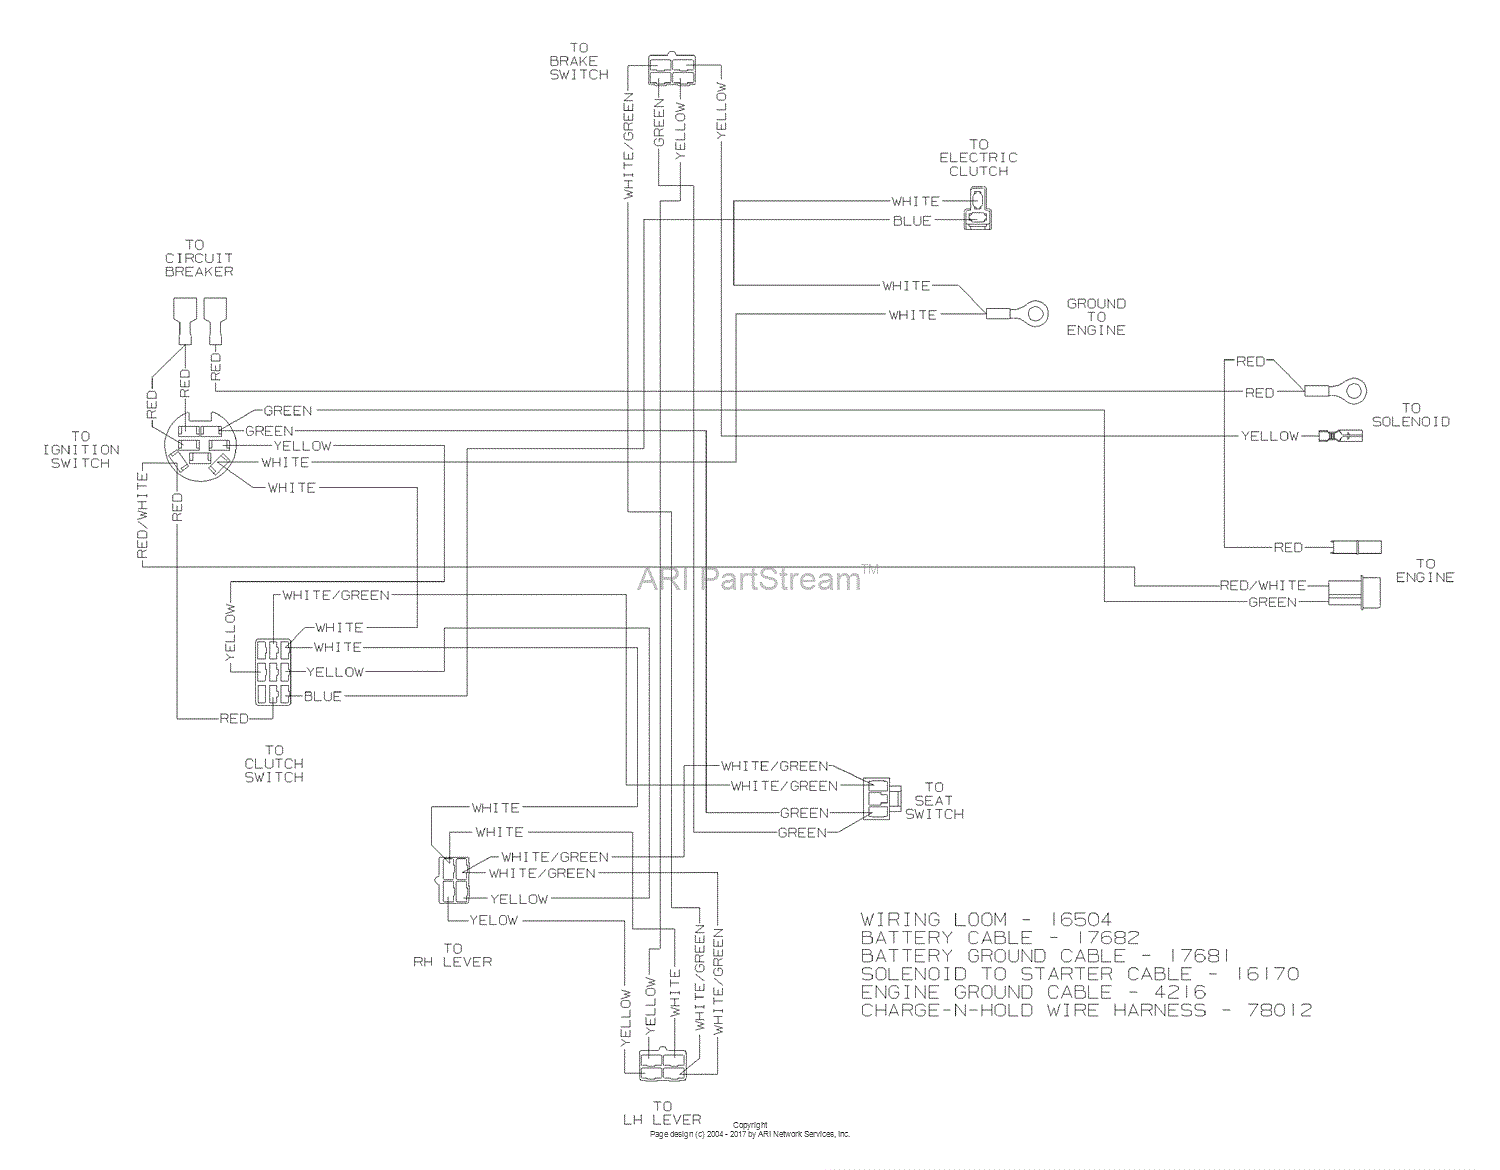 Diagram Lionel Train Wiring Diagram Full Version Hd Quality Wiring Diagram Networkwiringlosangeles Parkhotelginevra It